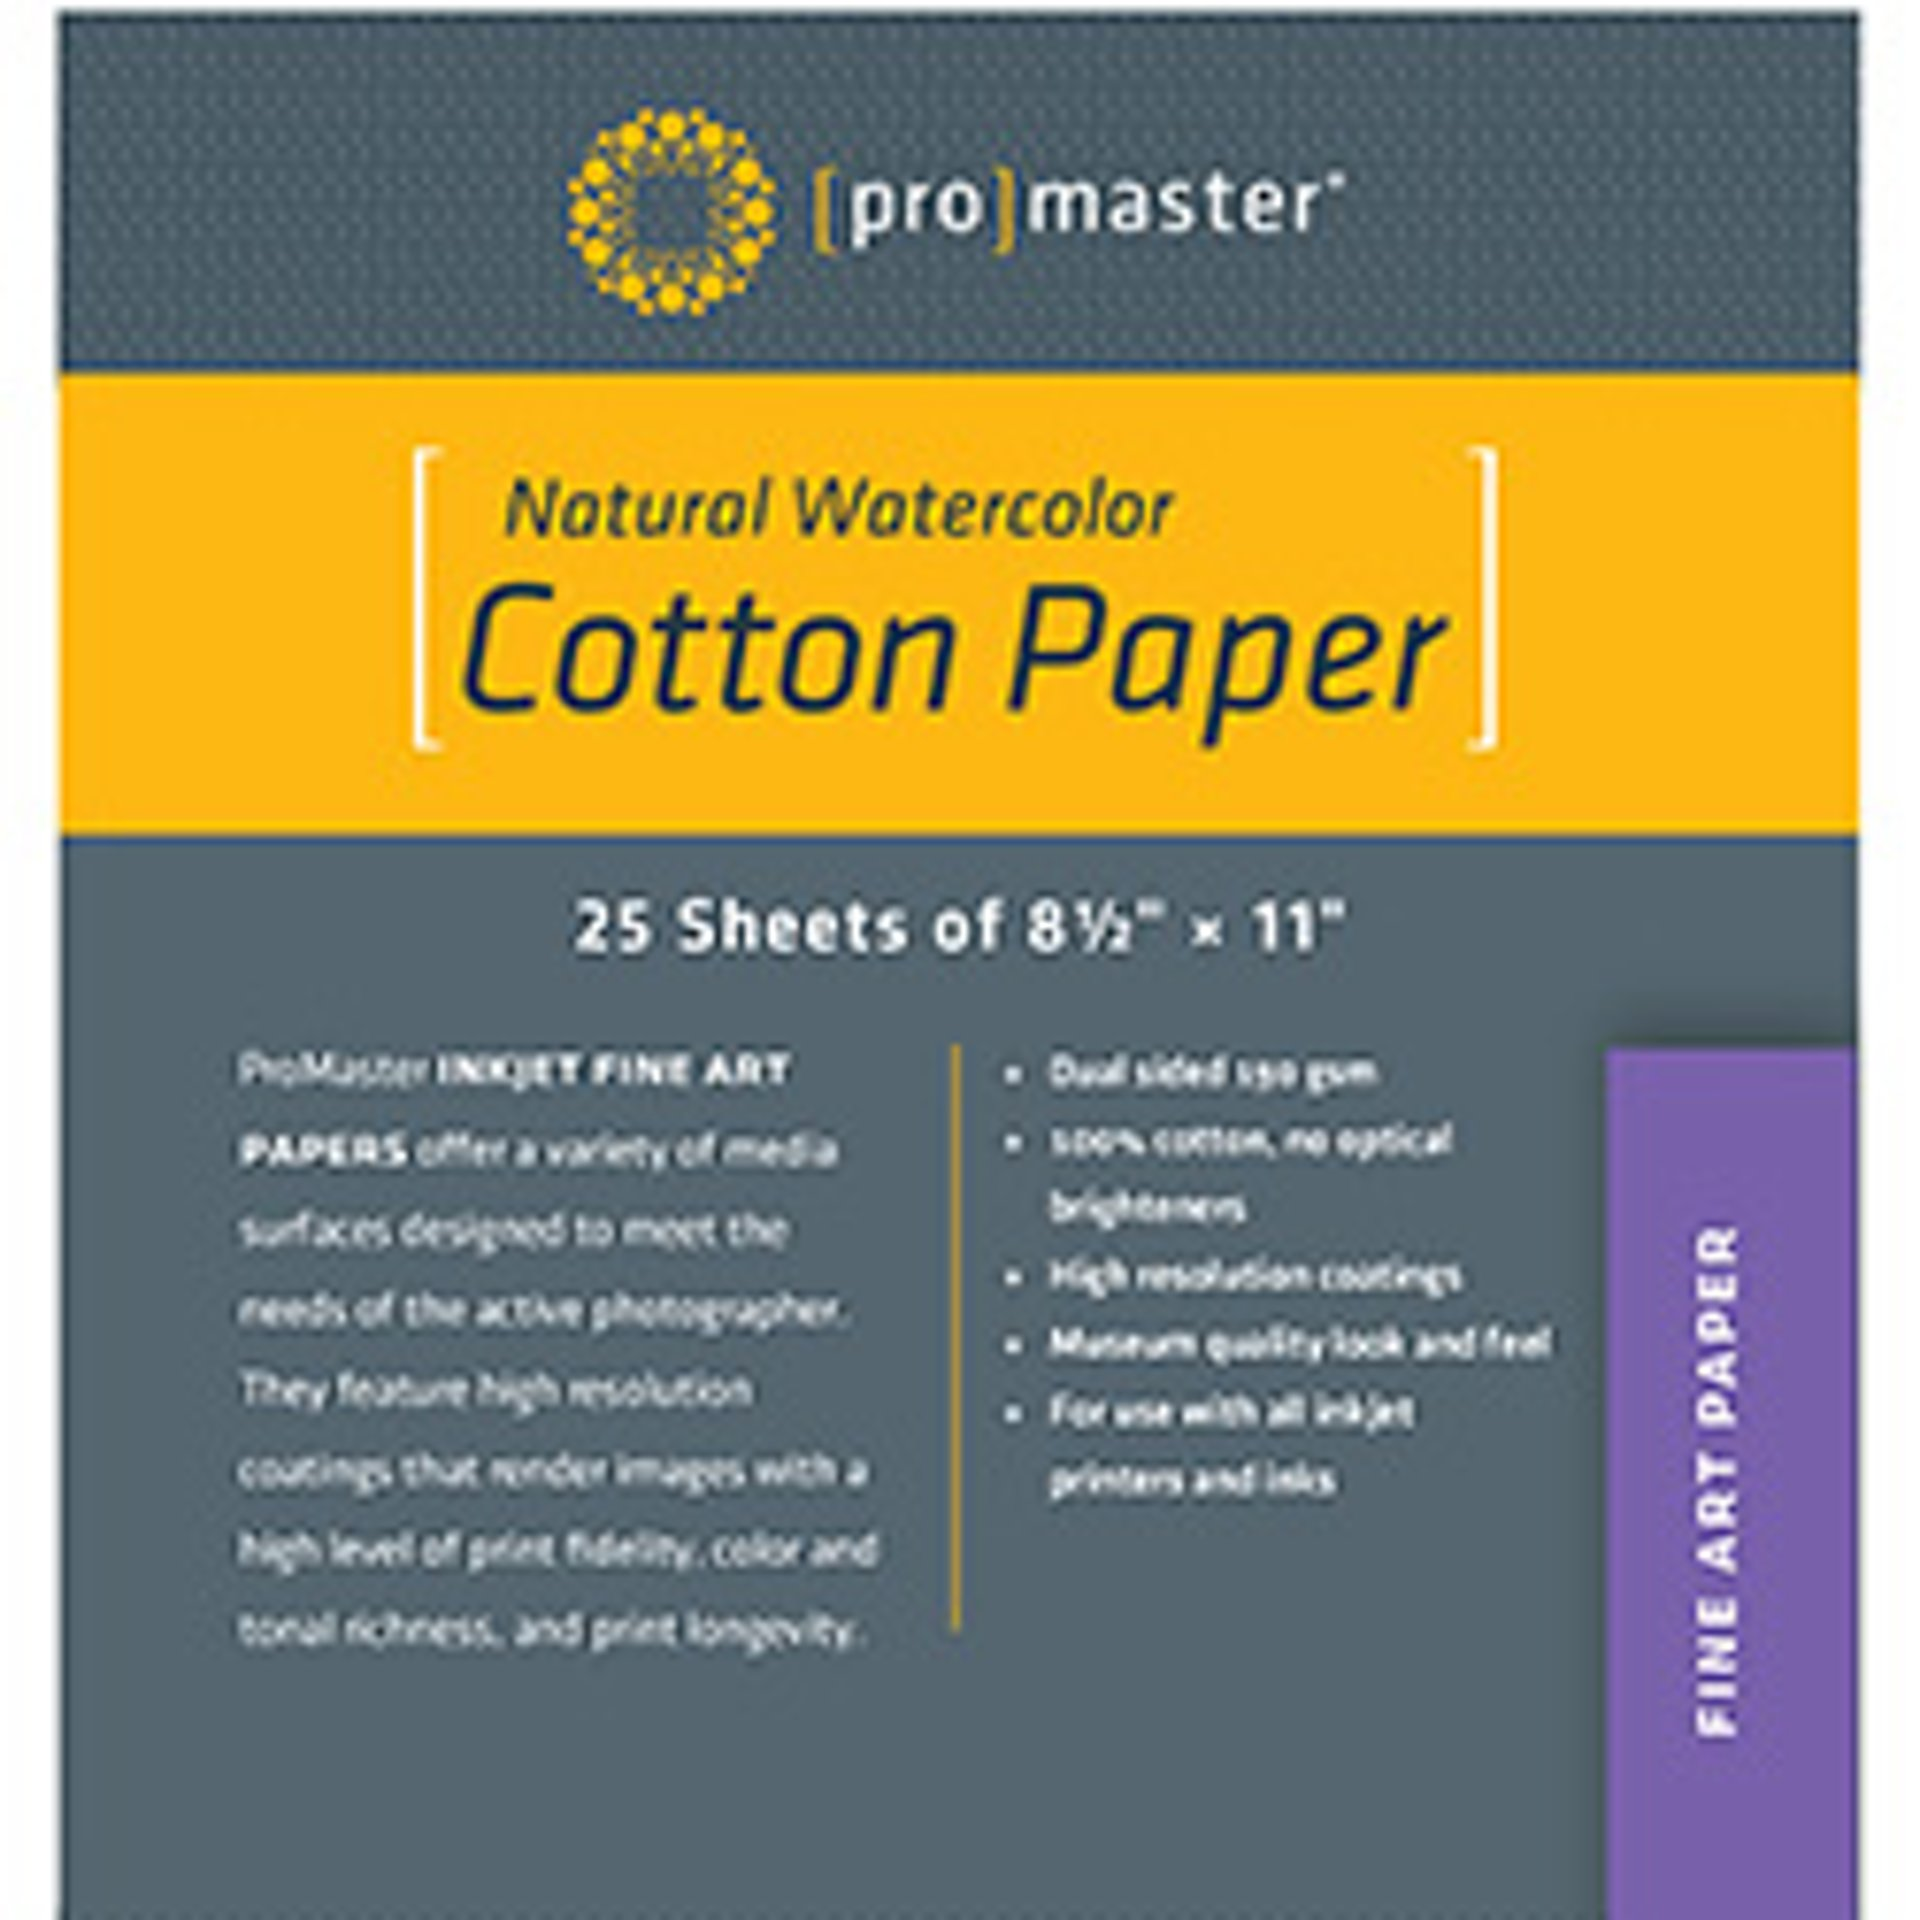 Promaster 5362 Natural Watercolor Cotton Paper - 8 1/2"x11" - 25 Sheets - 8 1/2" x 11" - 25 Sheets